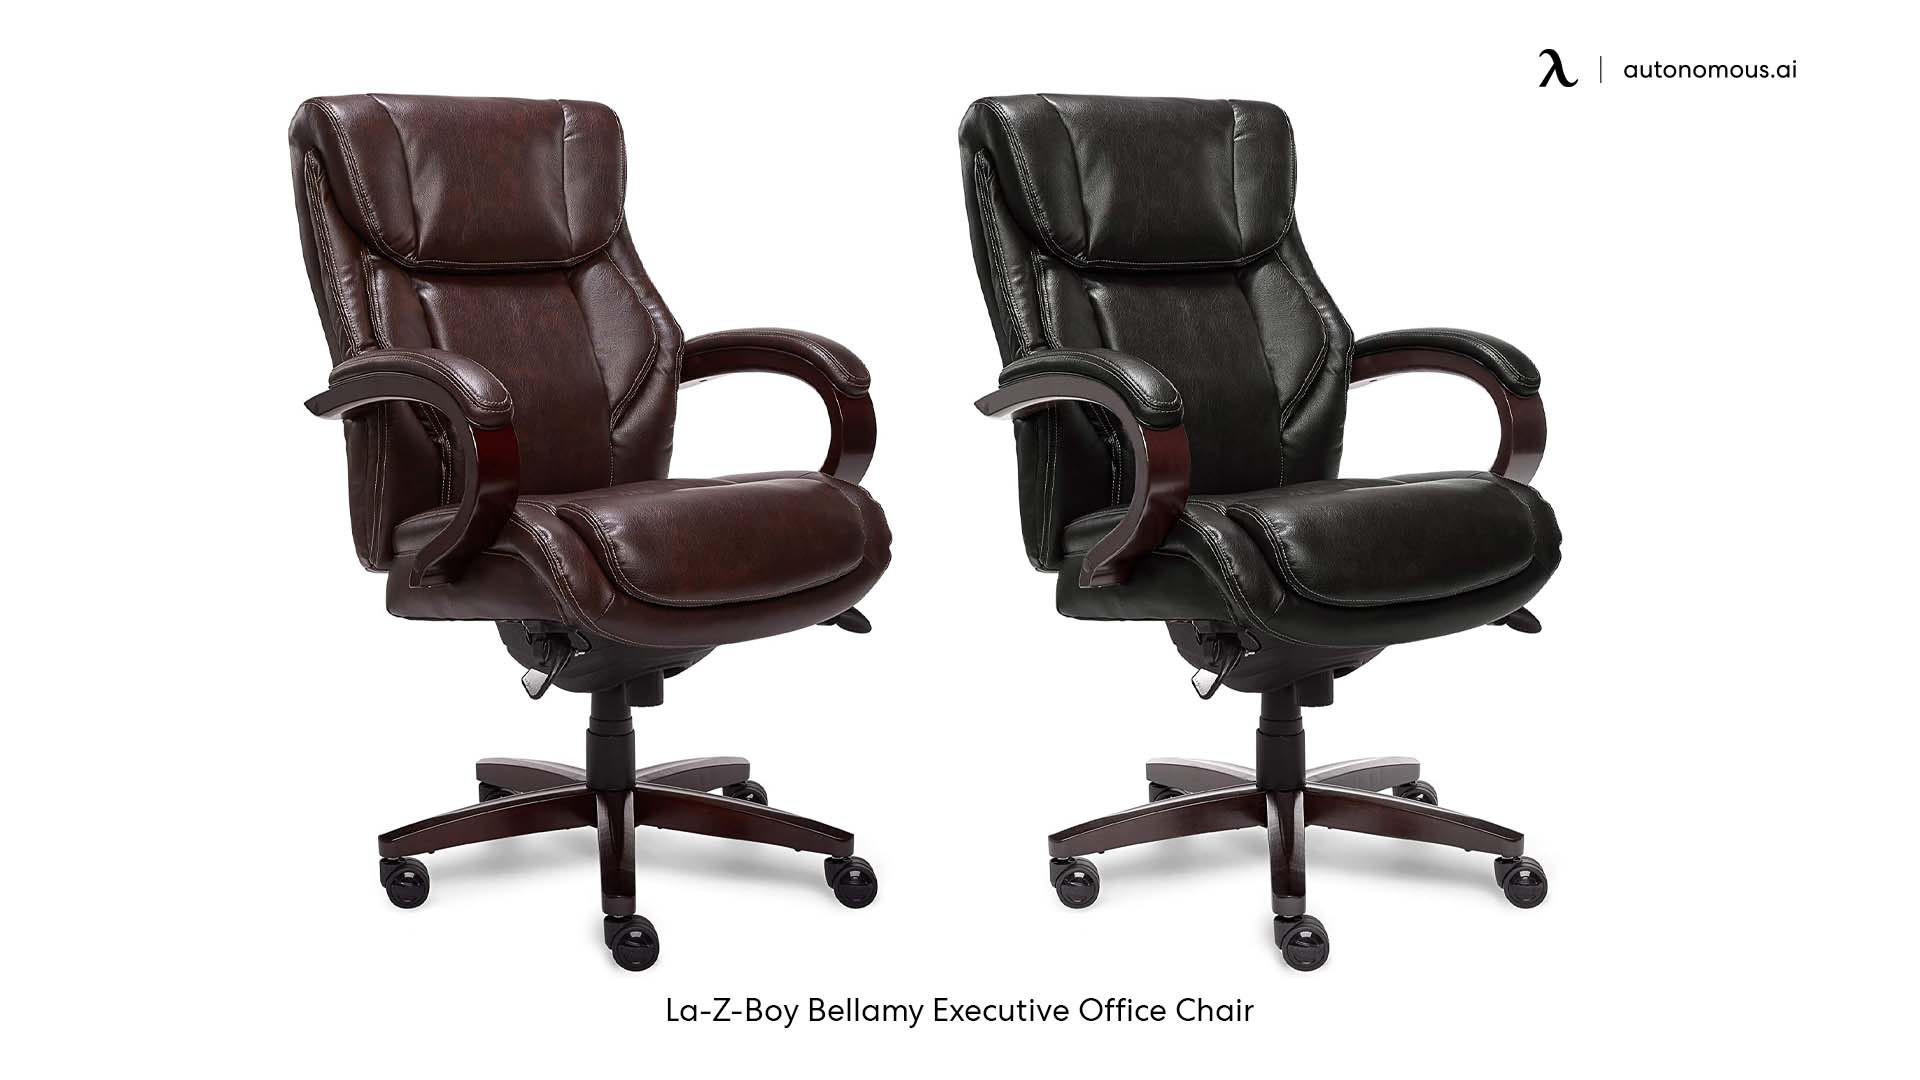 La-Z-Boy Bellamy Executive Office Chair